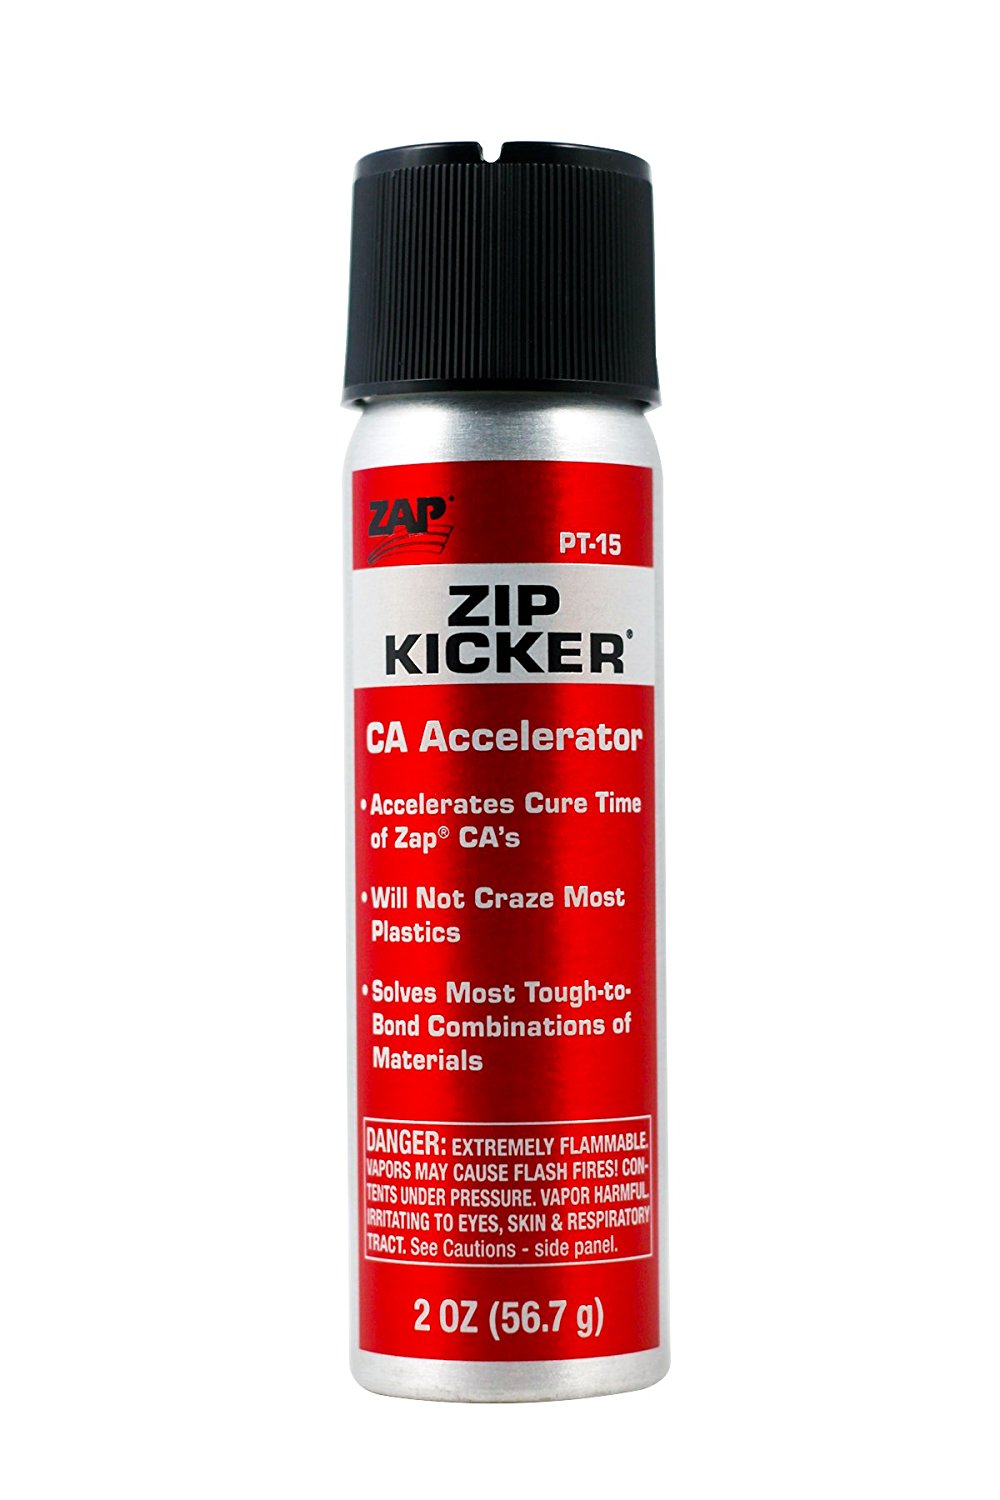 Zap-A-Gap PT-15 - ZIP Kicker - CA Accelerator (2 Oz)